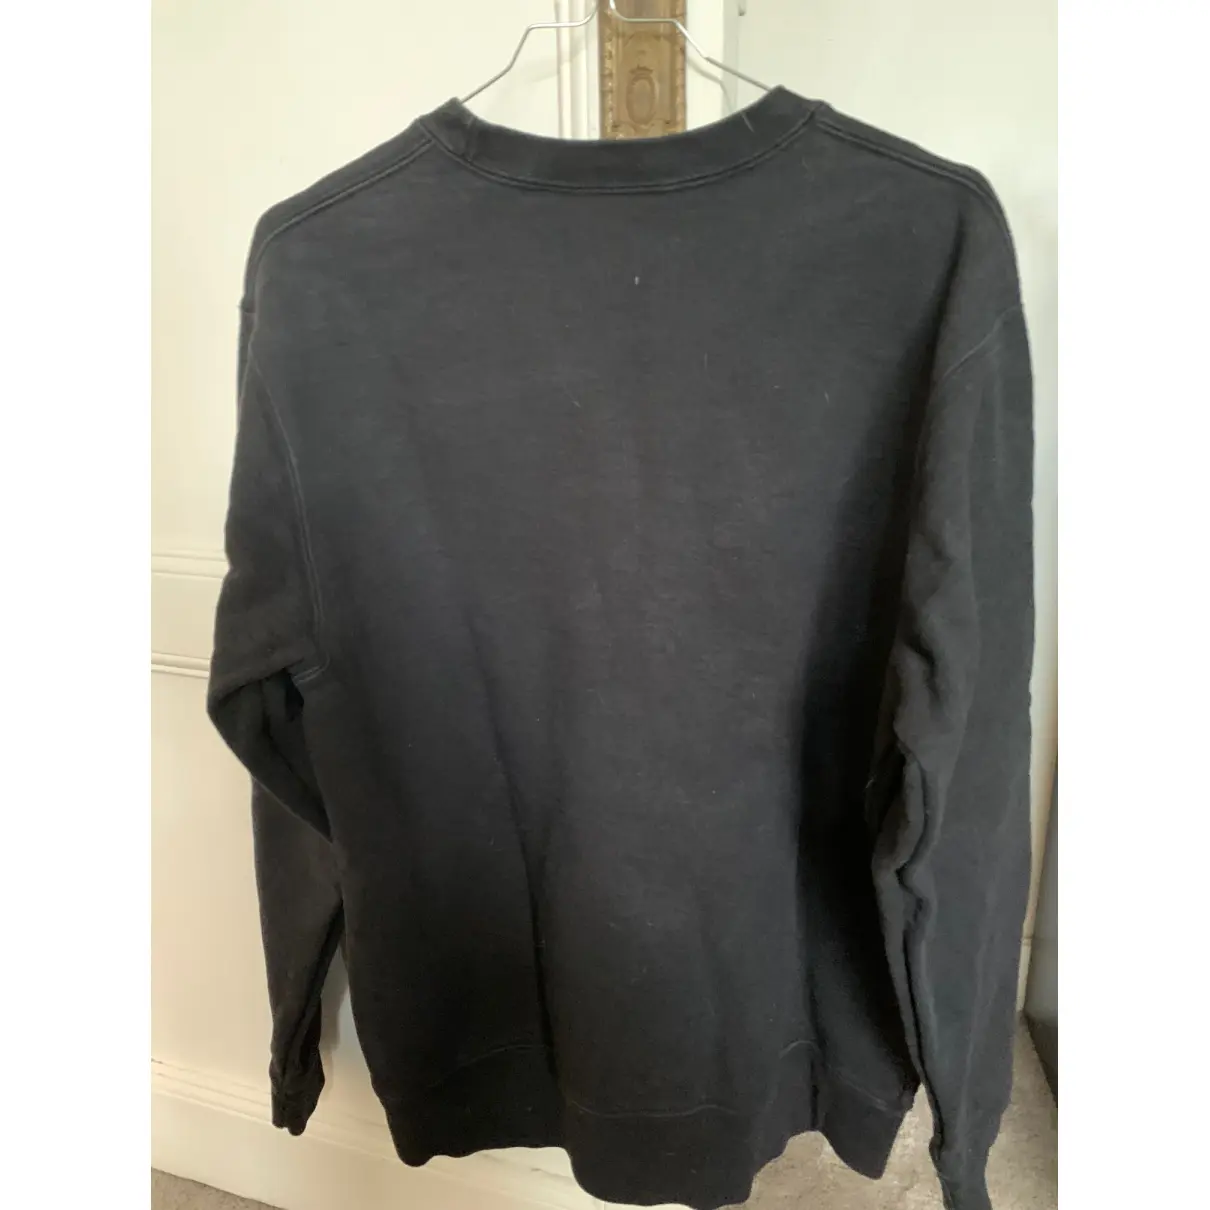 Buy Supreme Black Cotton Knitwear & Sweatshirt online